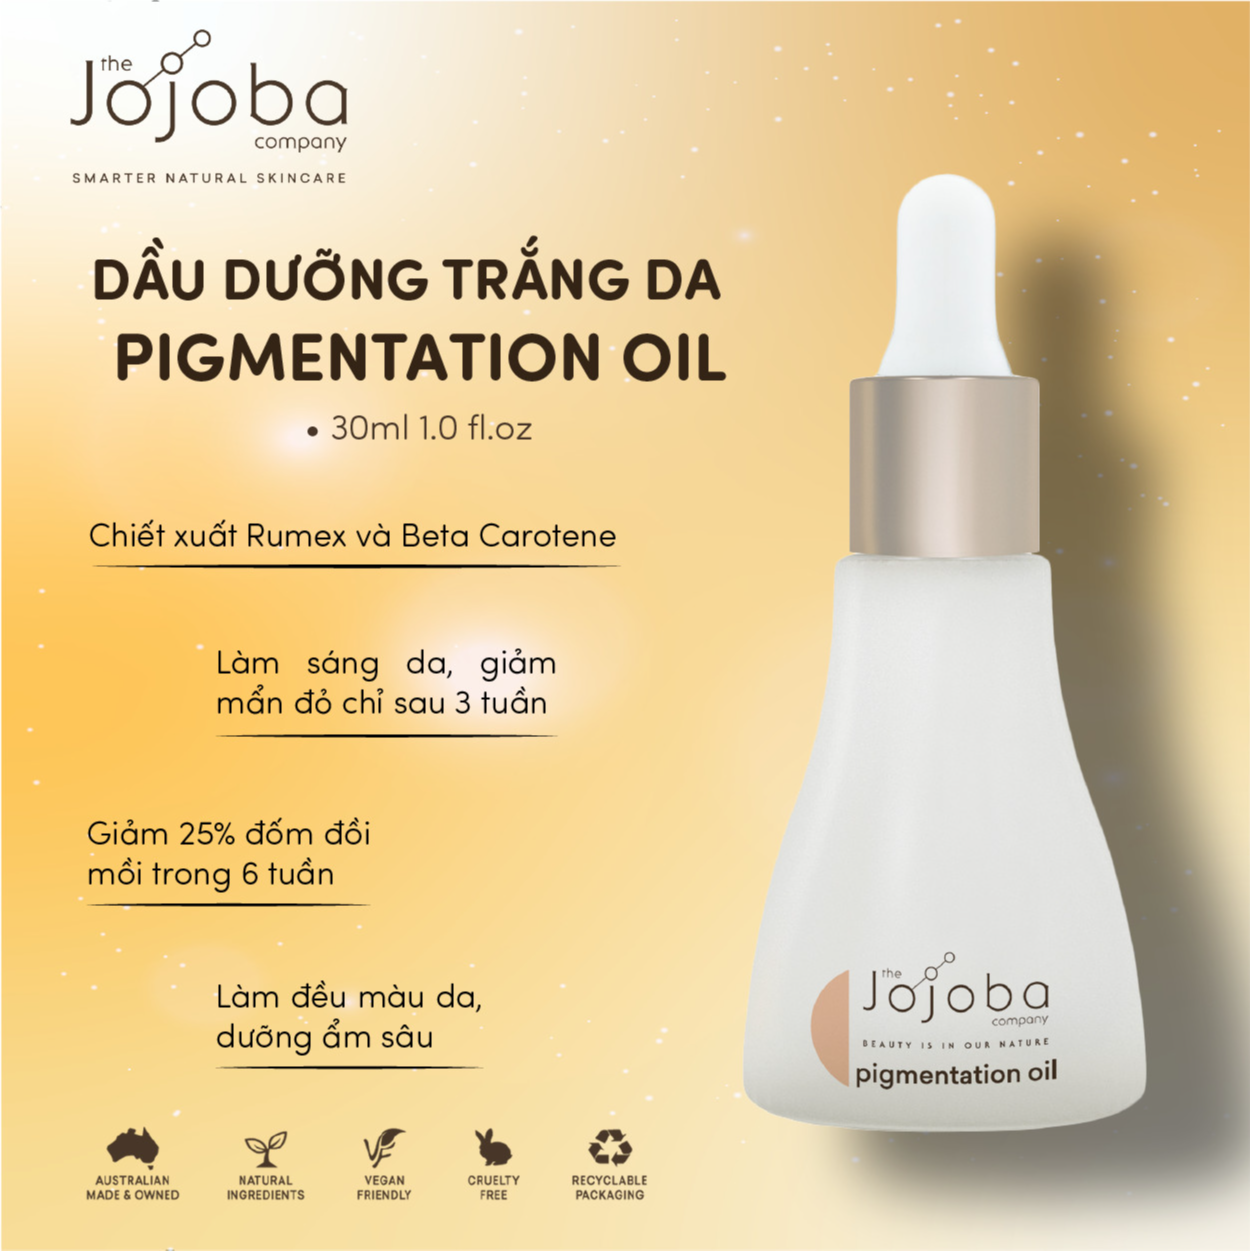 Dầu dưỡng trắng da Pigmentation Oil 30ml - The Jojoba Company